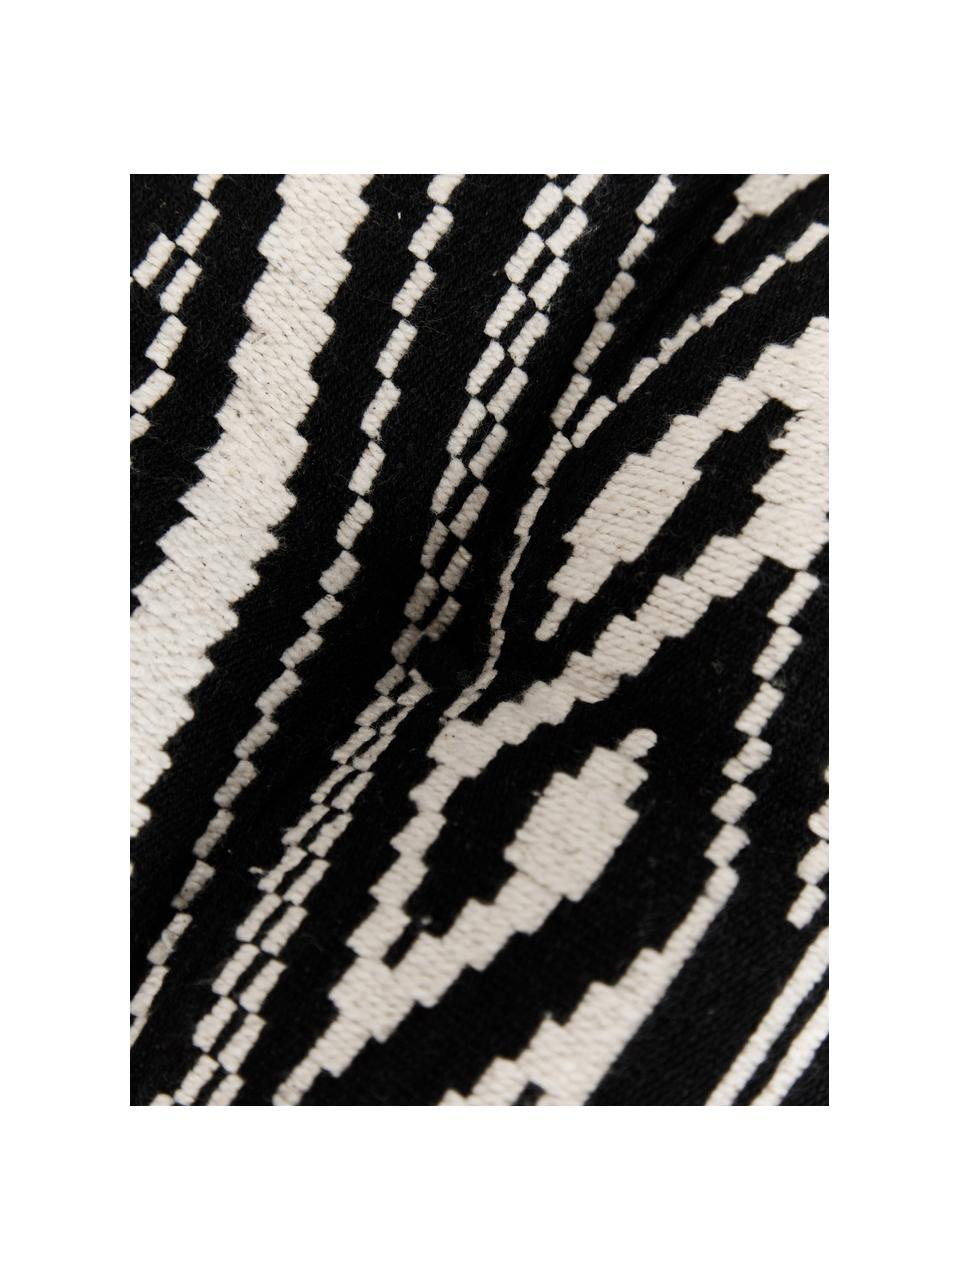 Cojín de asiento de algodón Blaki, Tapizado: 100% algodón, Negro, beige, An 40 x L 40 cm